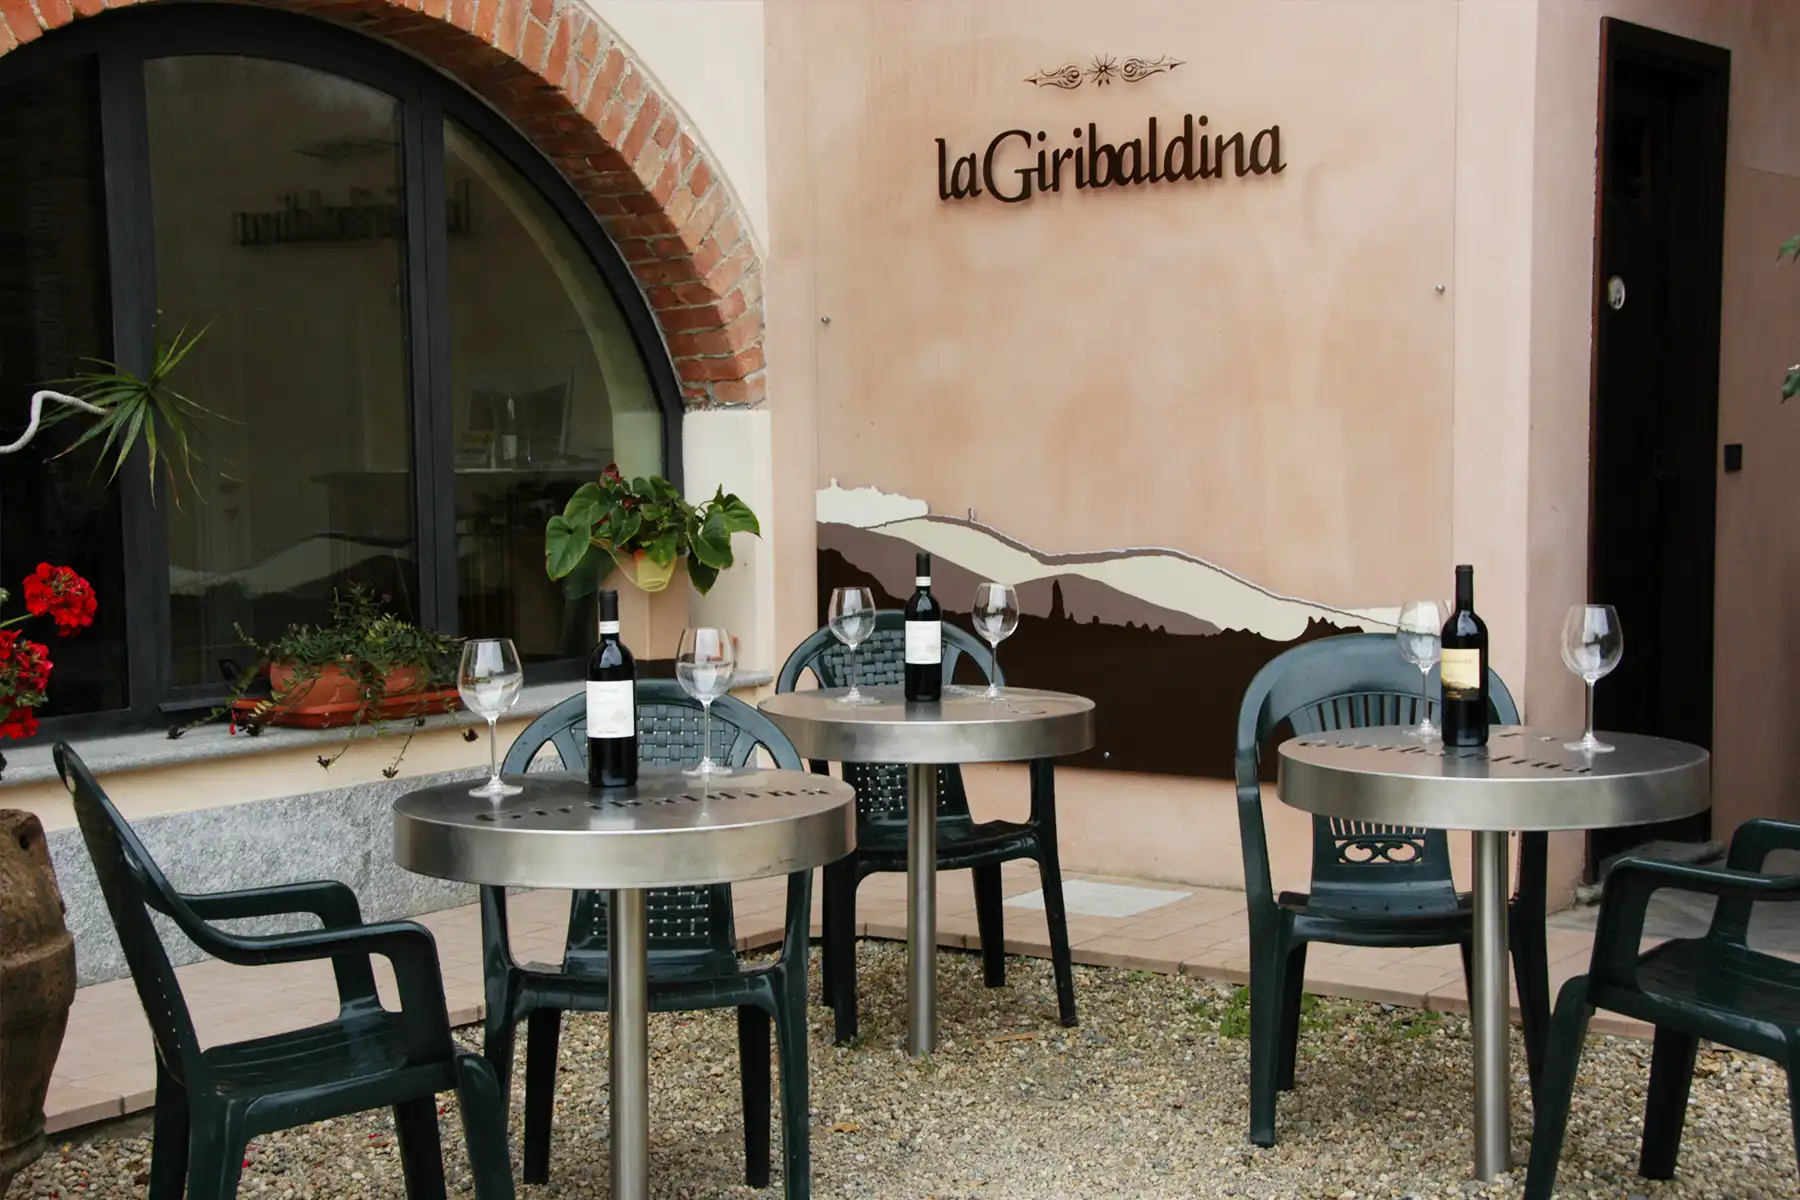 Italian wine tastings at La Giribaldina in Calamandrana, Piedmont